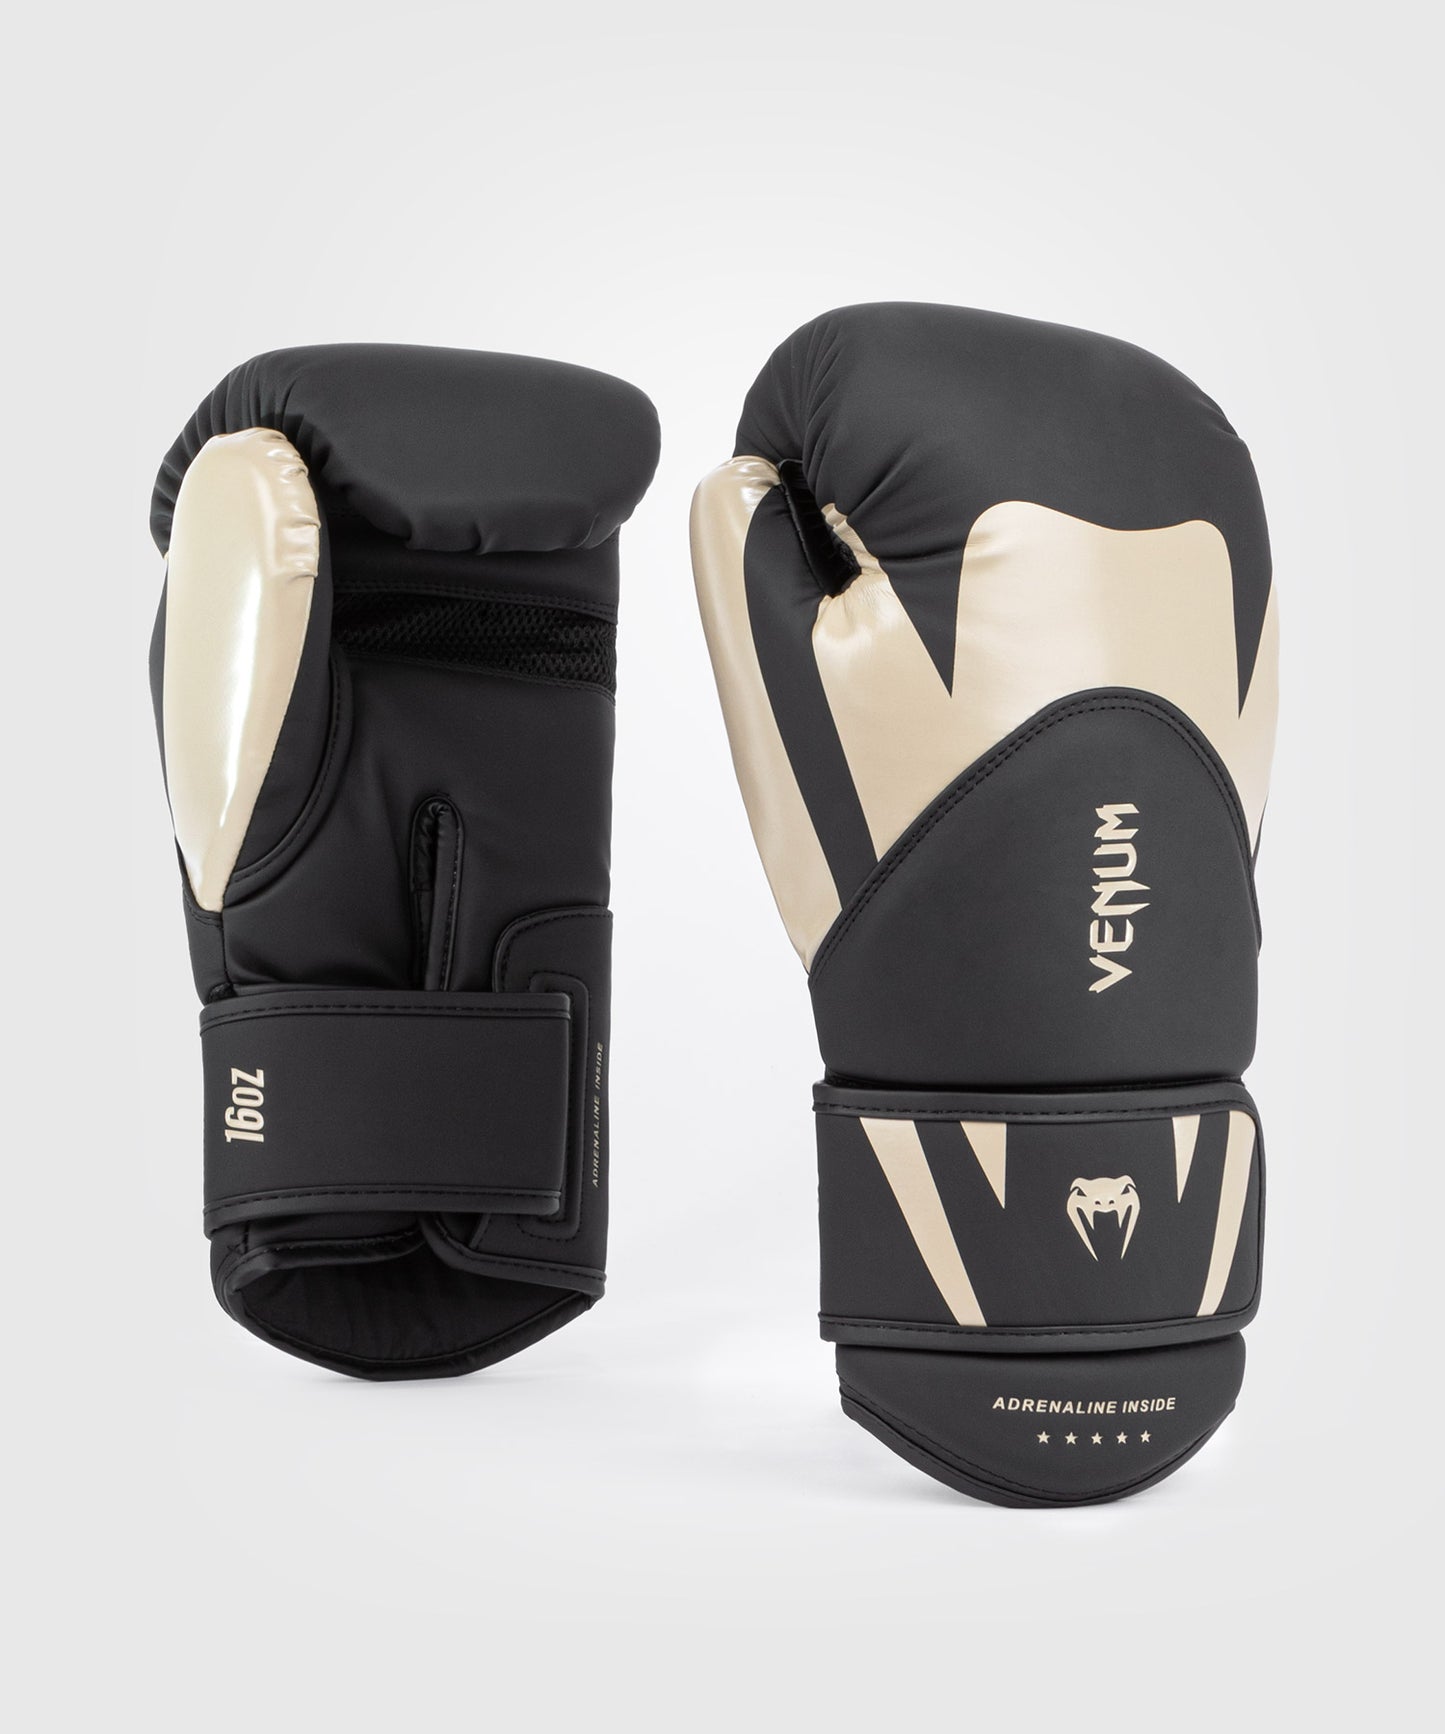 Venum Challenger 4.0 Boxing Gloves - Black/Beige